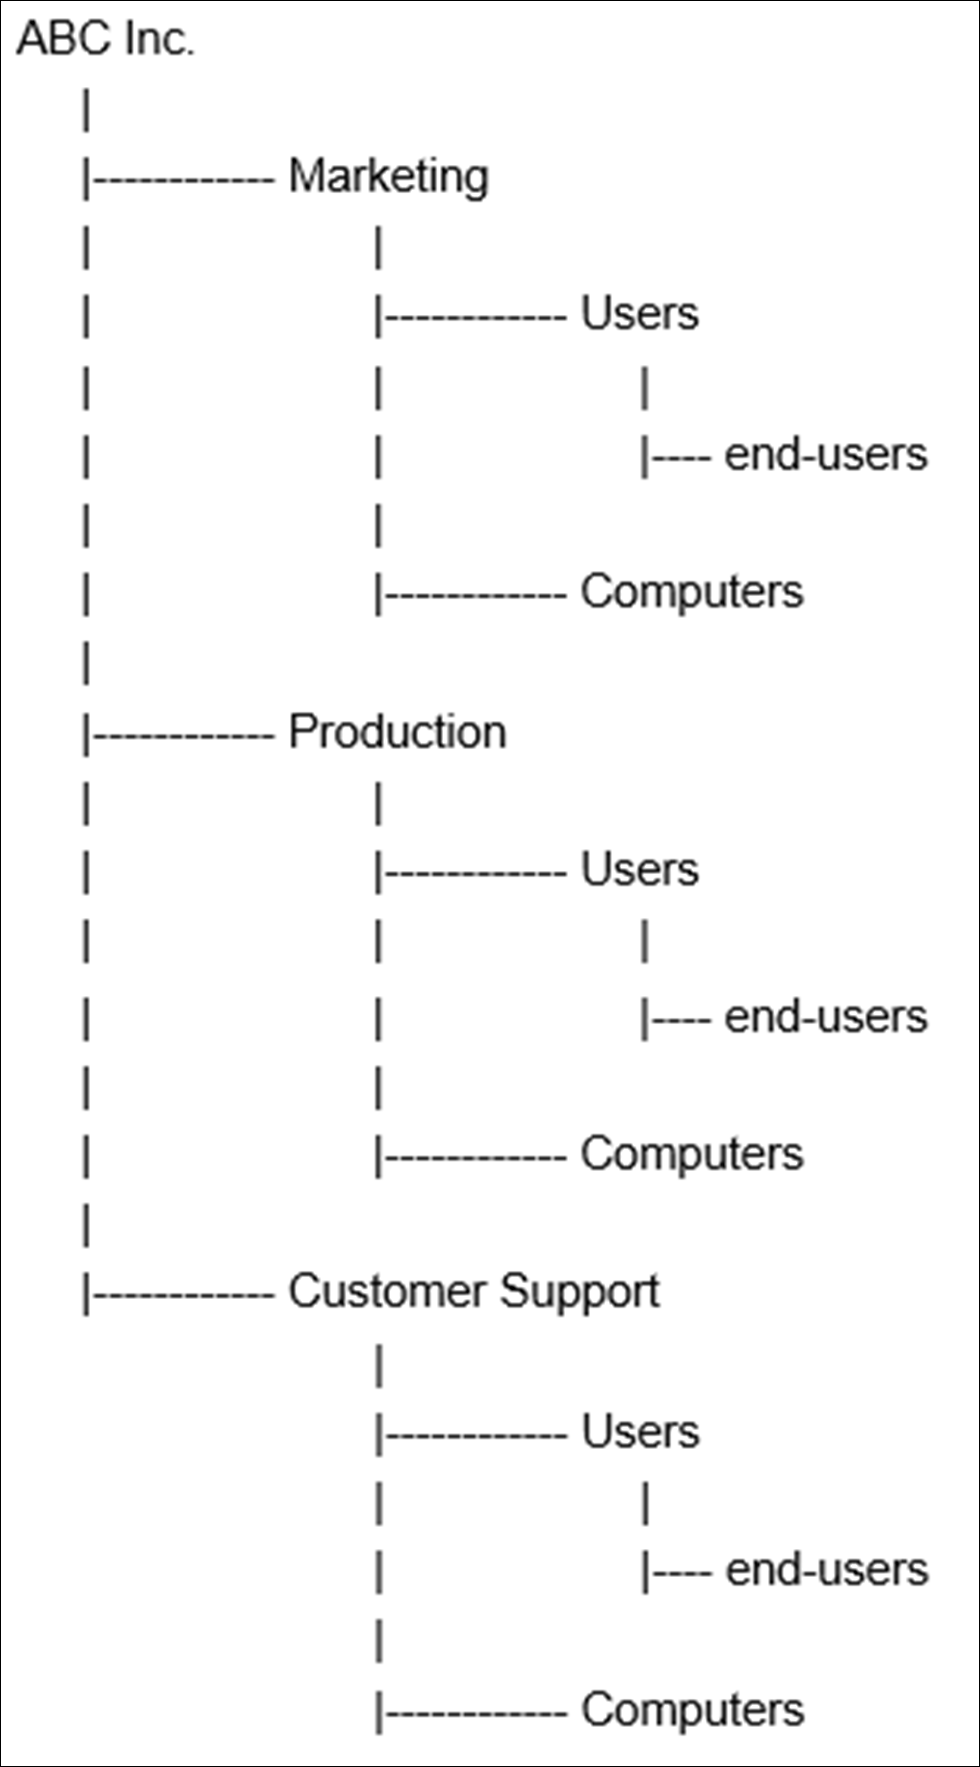 Sample organizational structure